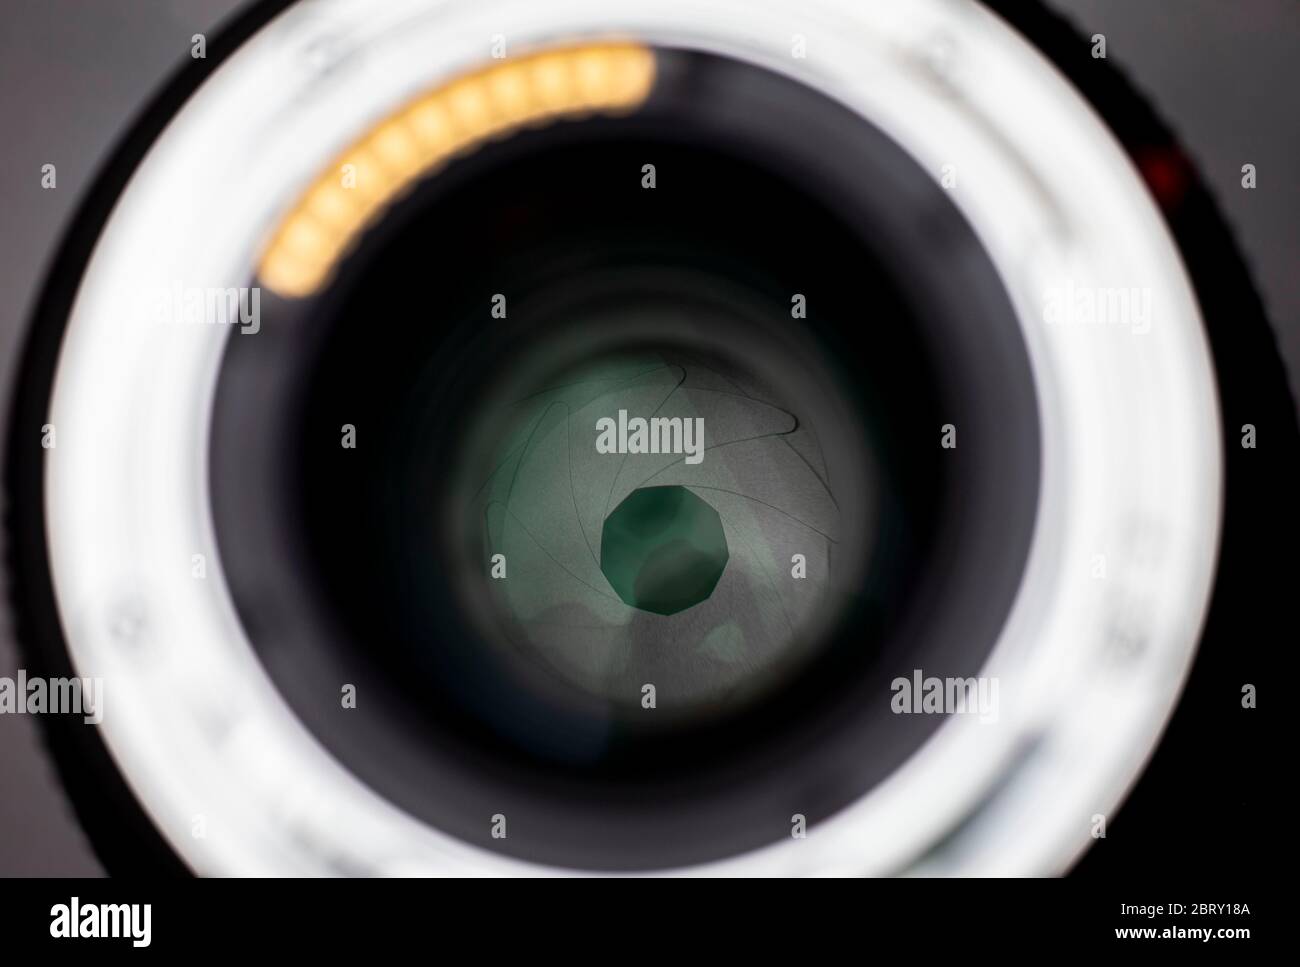 A Leica APO-SUMMICRON-SL 75 f/2 ASPH. Stock Photo